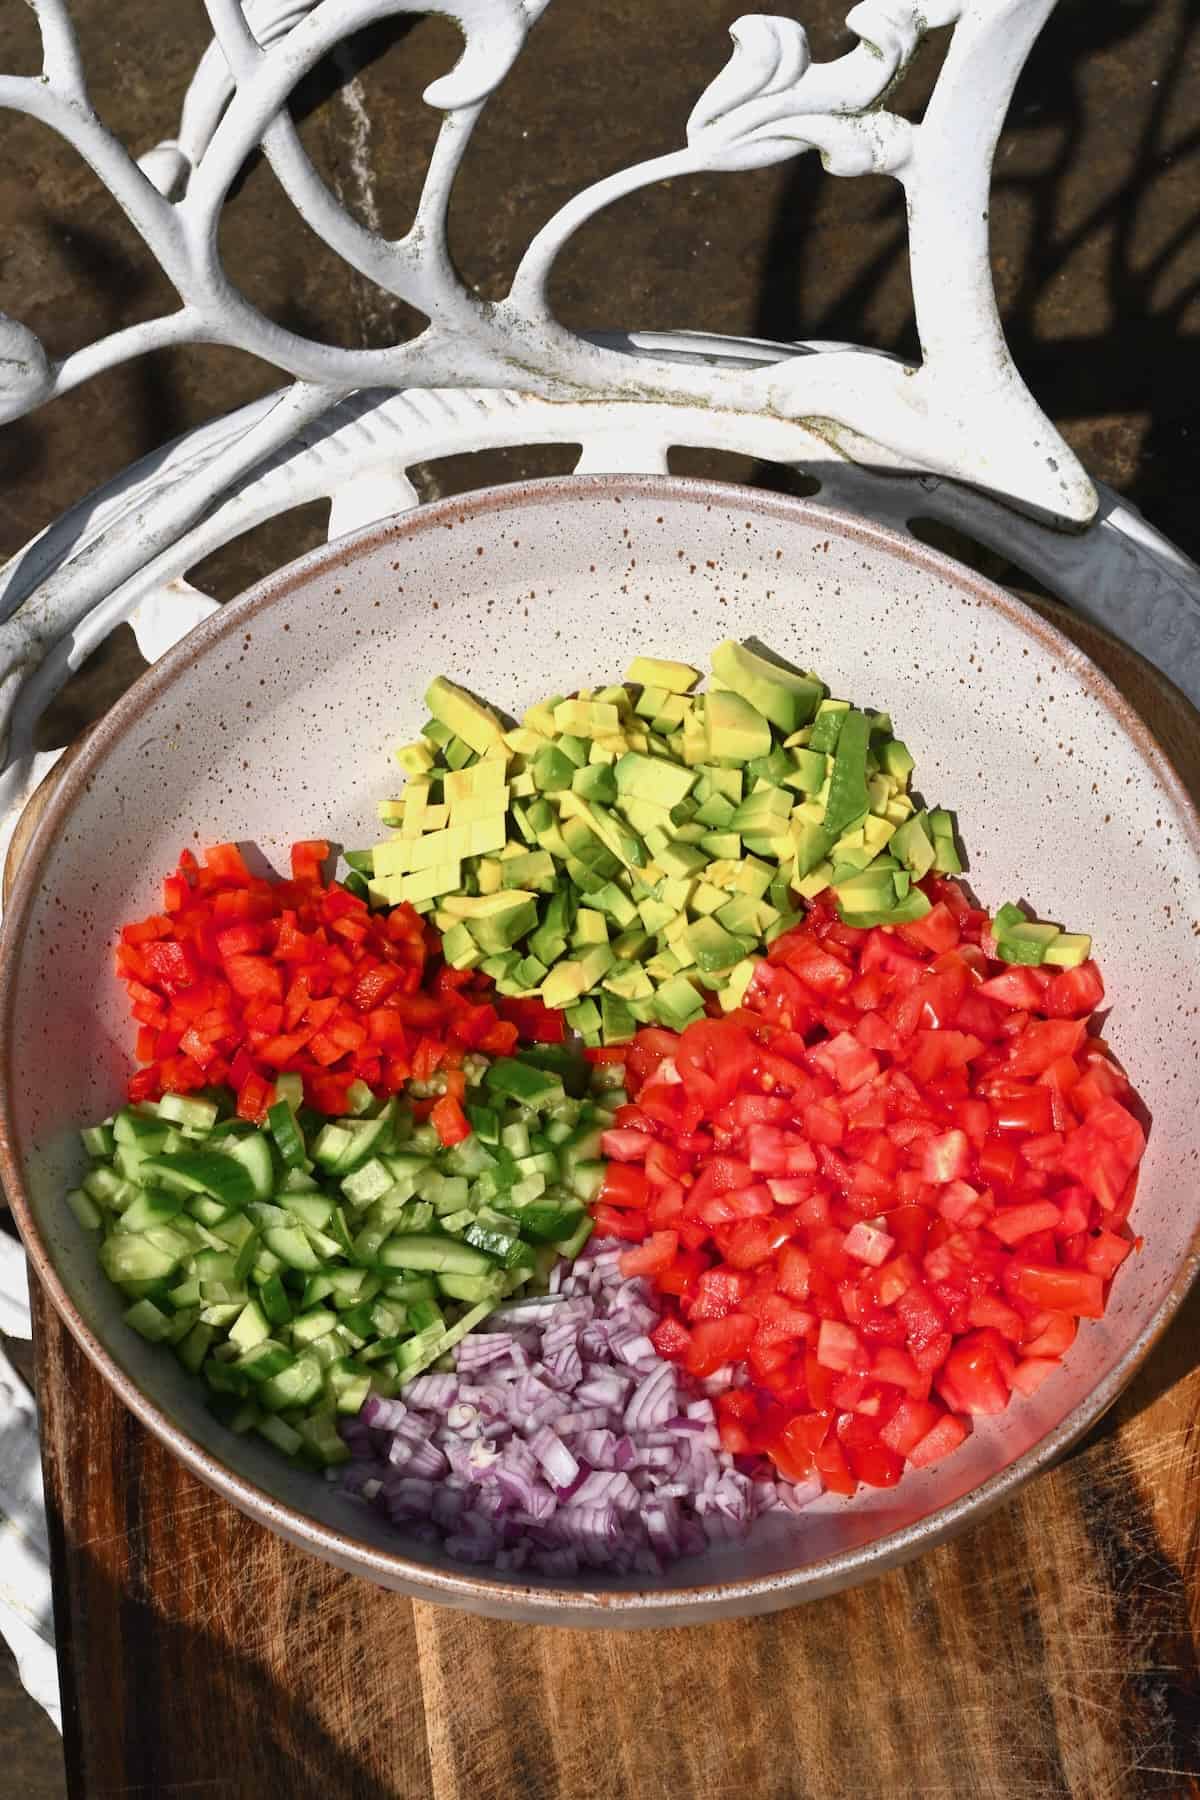 Chopped veggies in a bowl